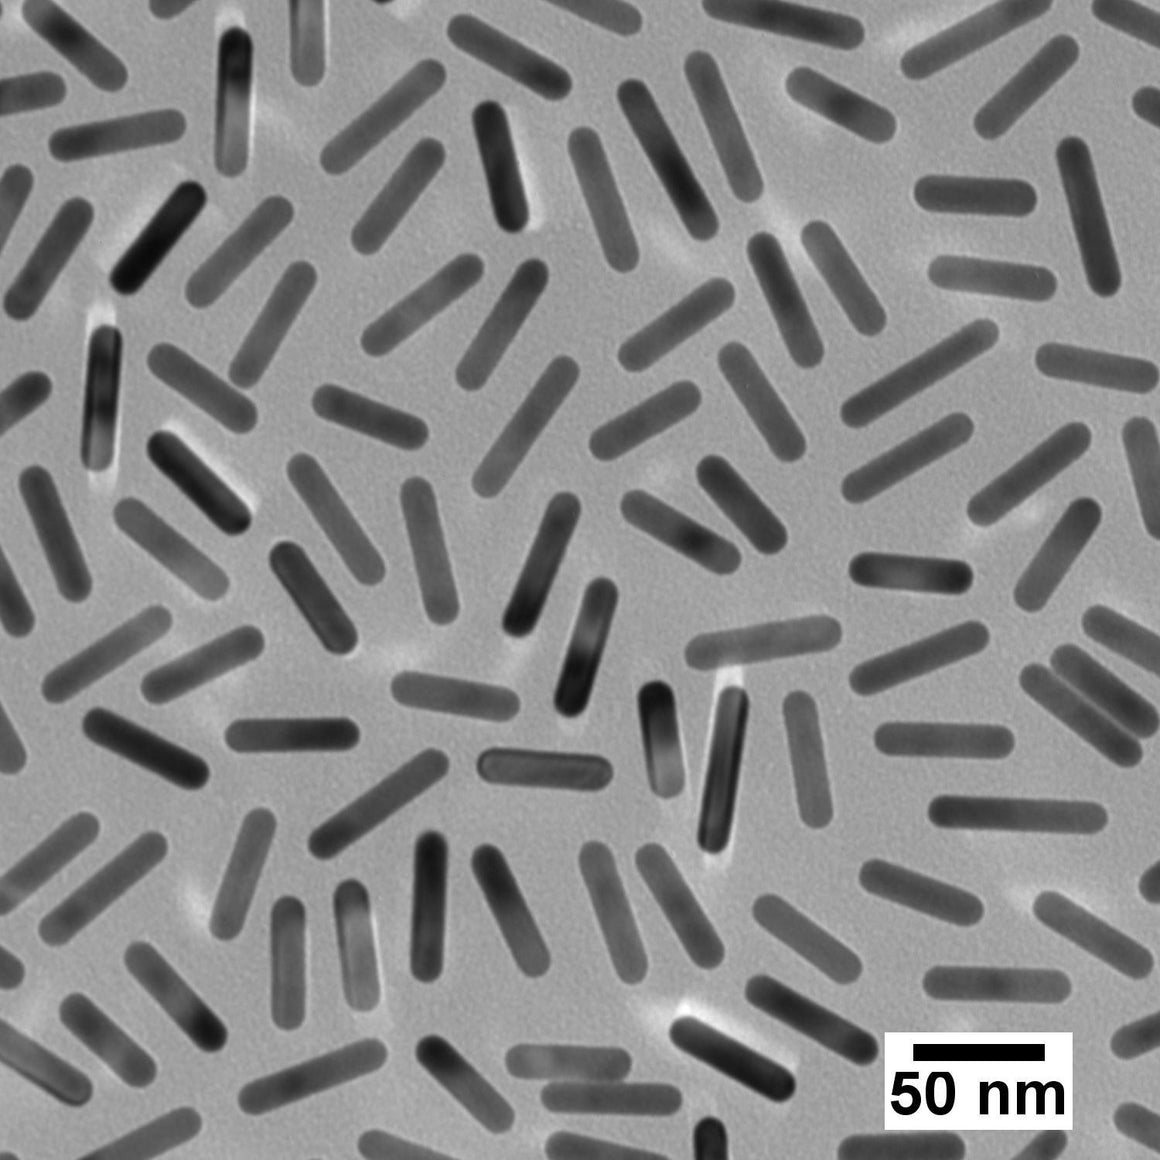 NanoXact Gold Nanorods – PEG-Carboxyl